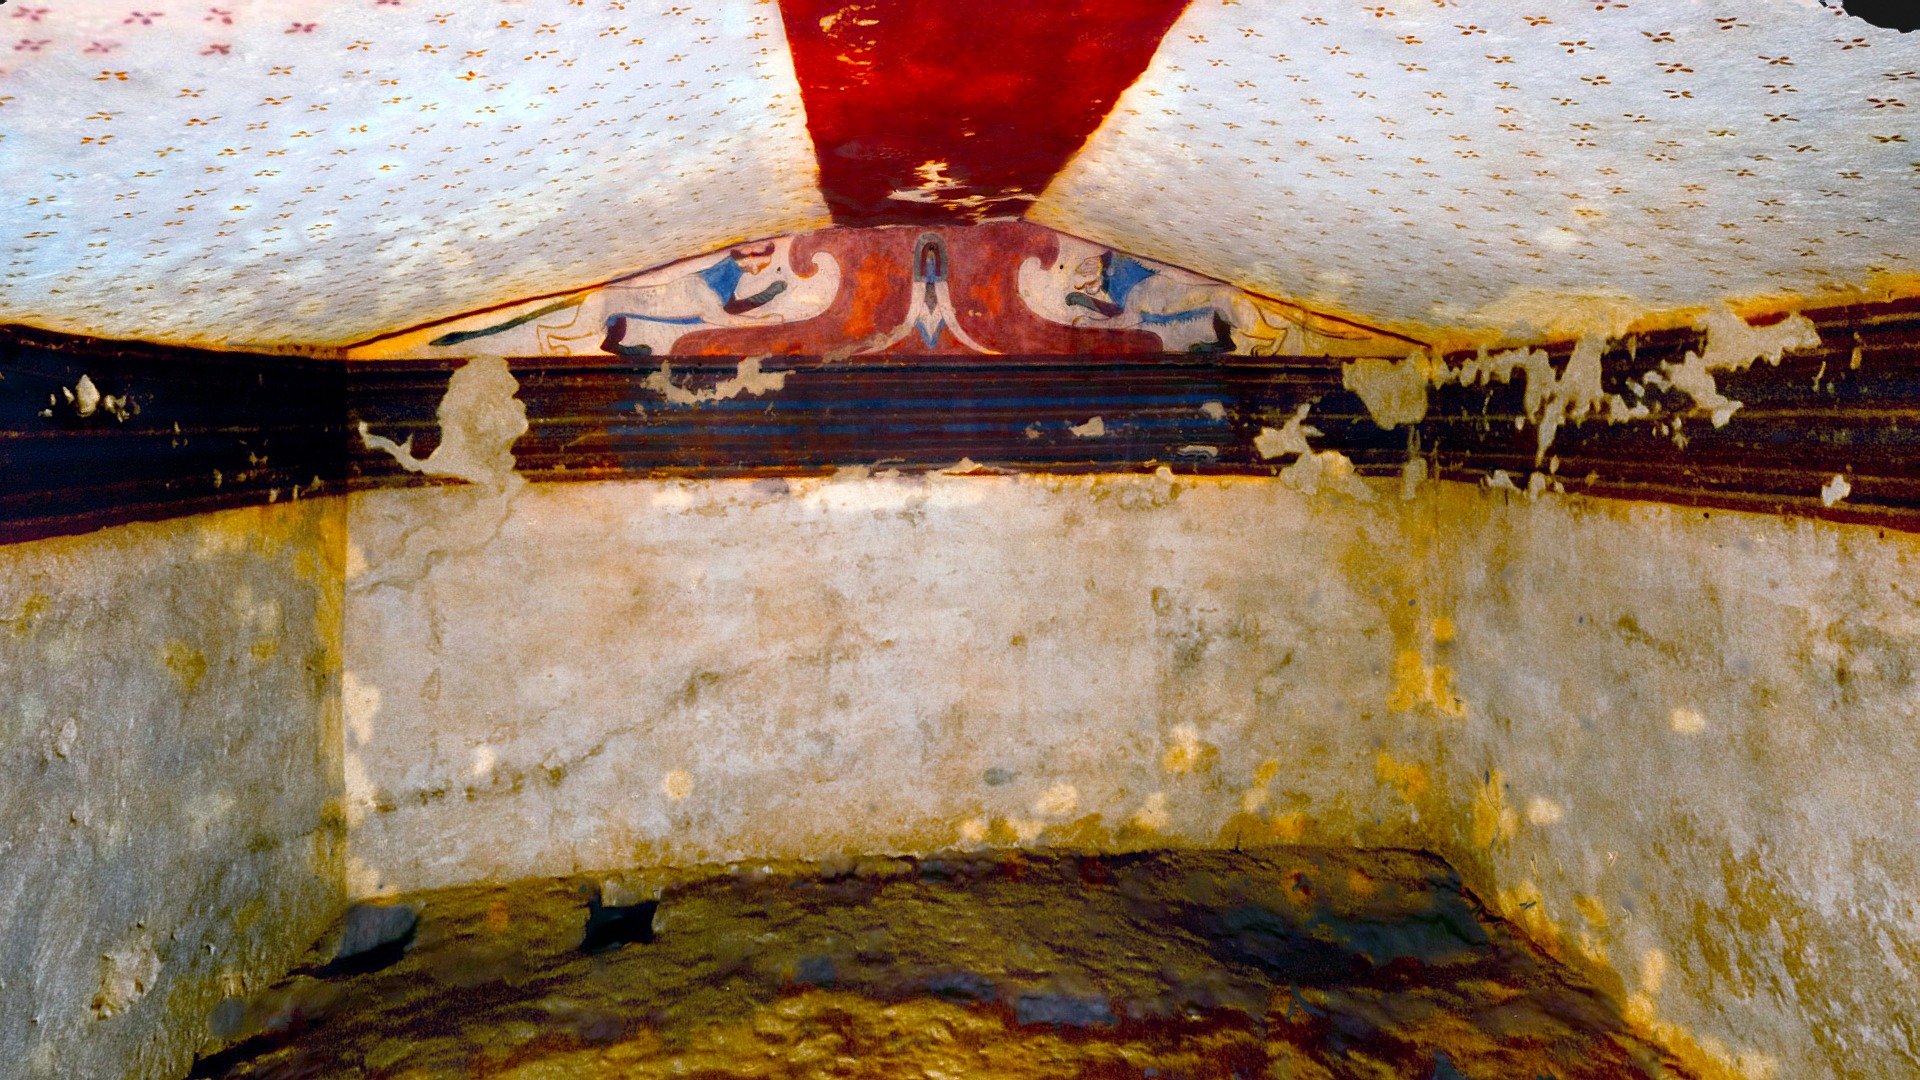 Tomb of the lotus in Tarquinia